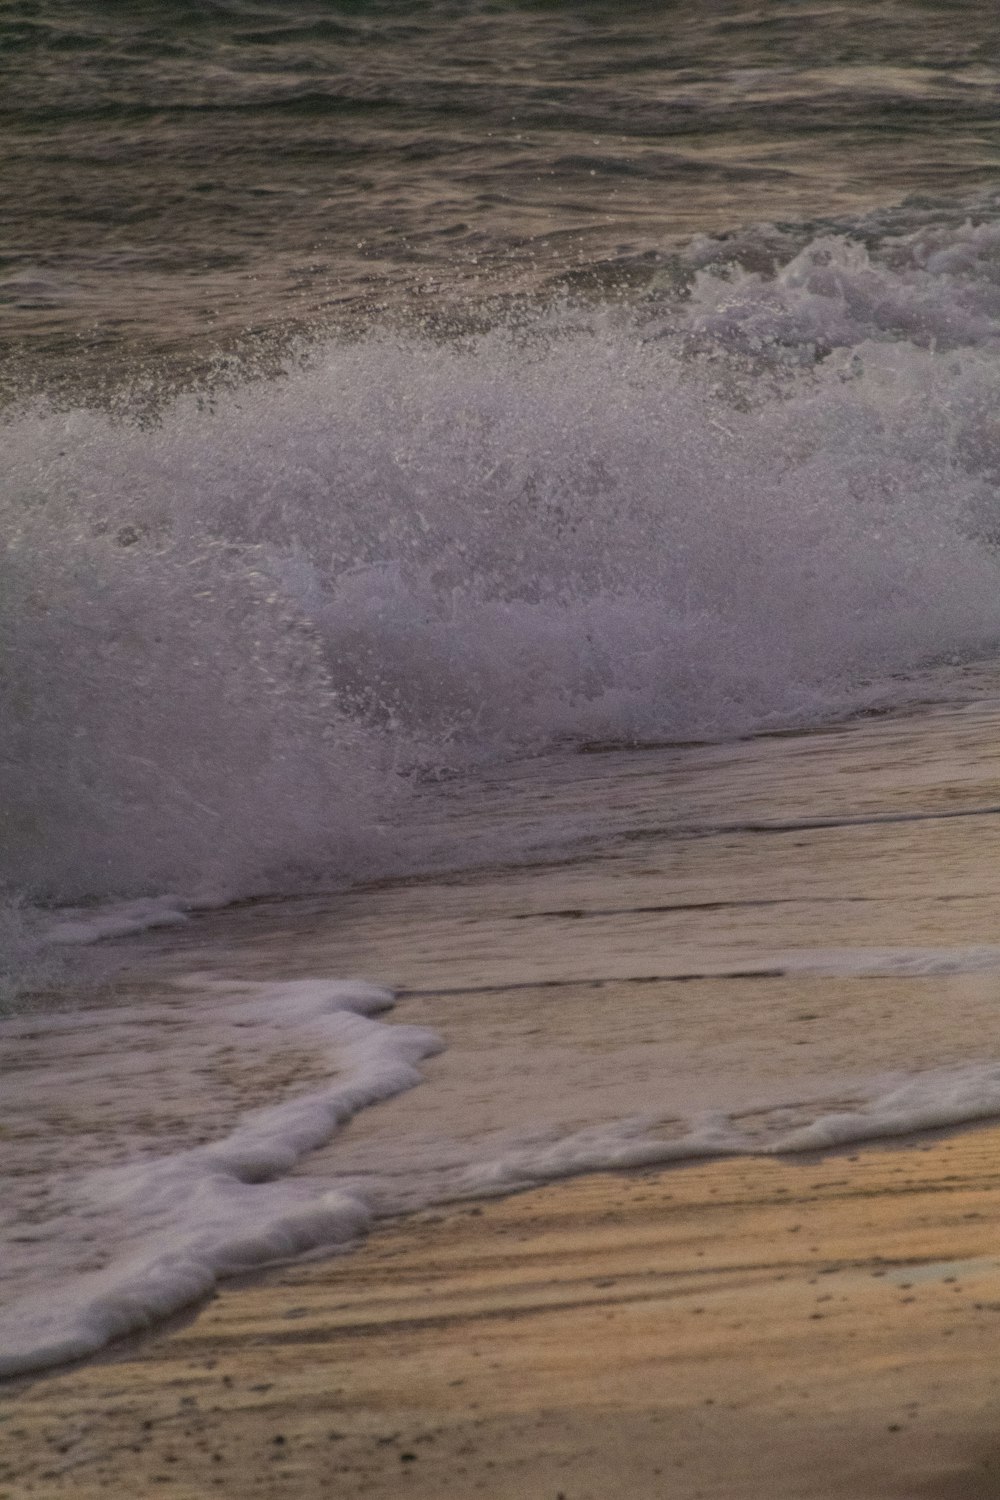 a wave crashing on a beach